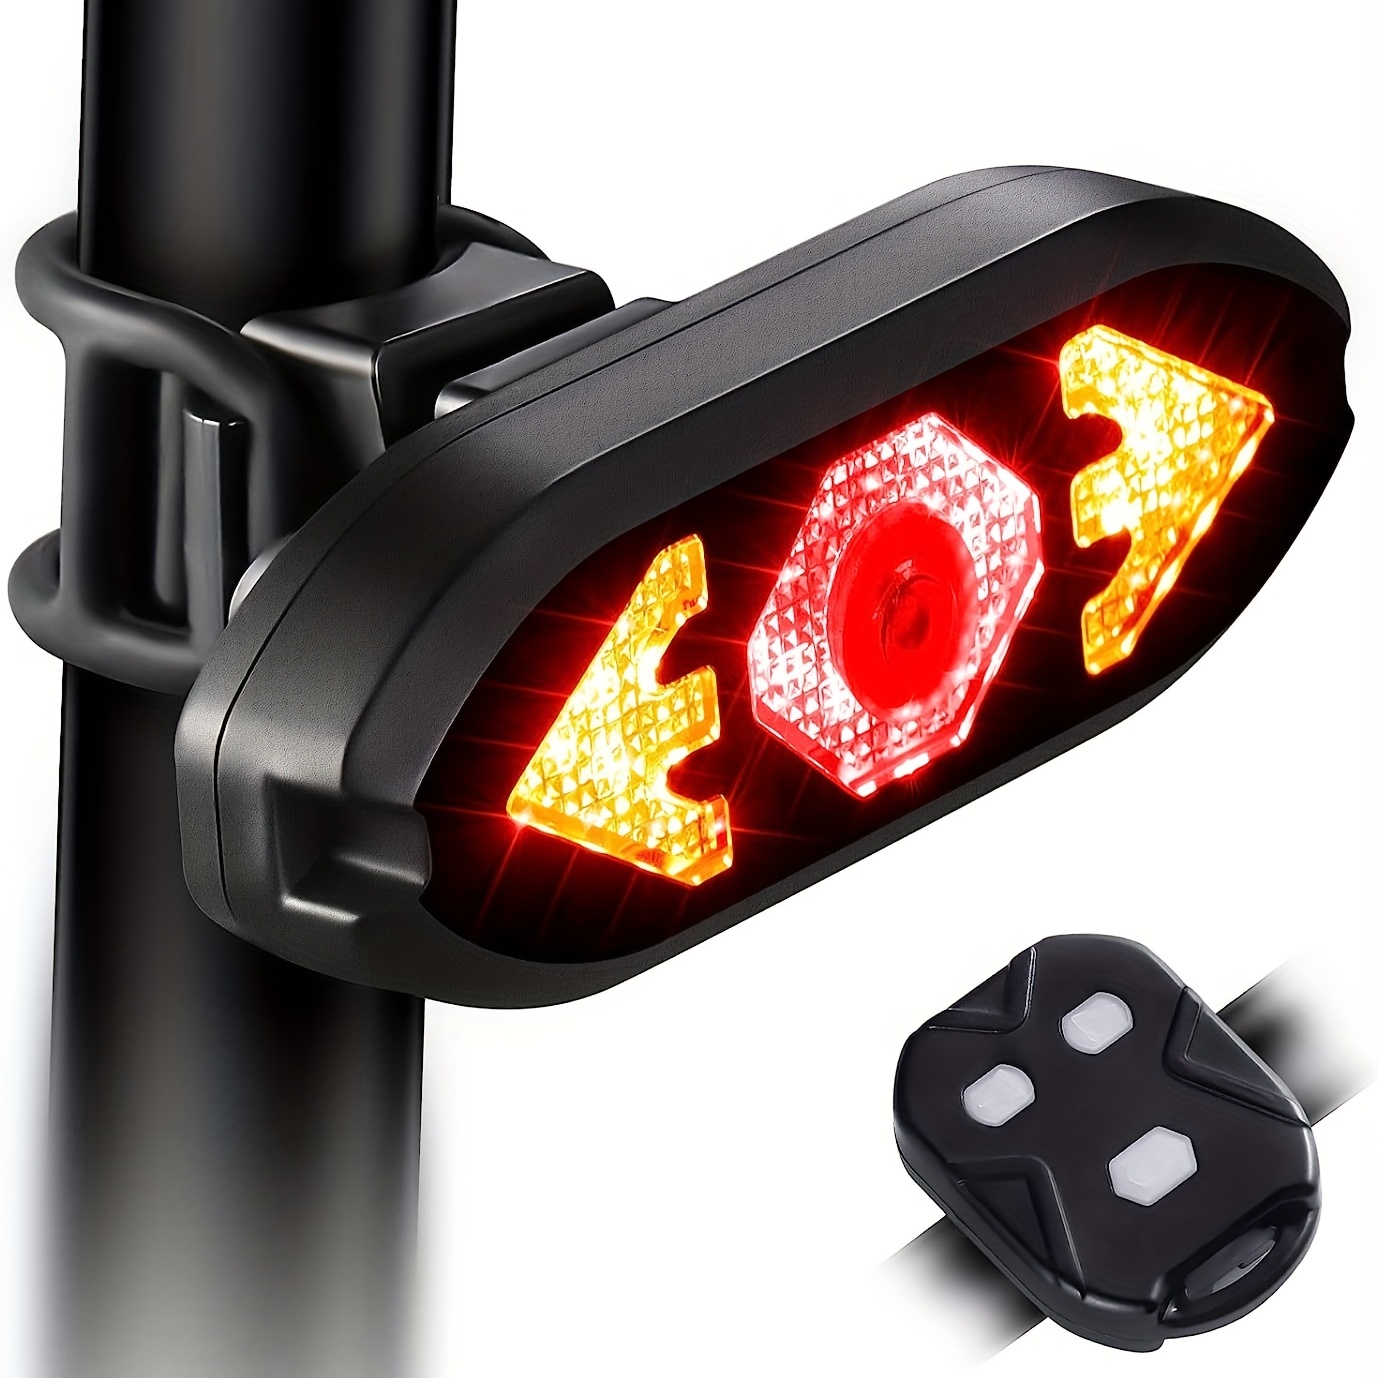 USB recargable inalámbrico control remoto bicicleta luz trasera alarma  campana freno automático inducción luz trasera